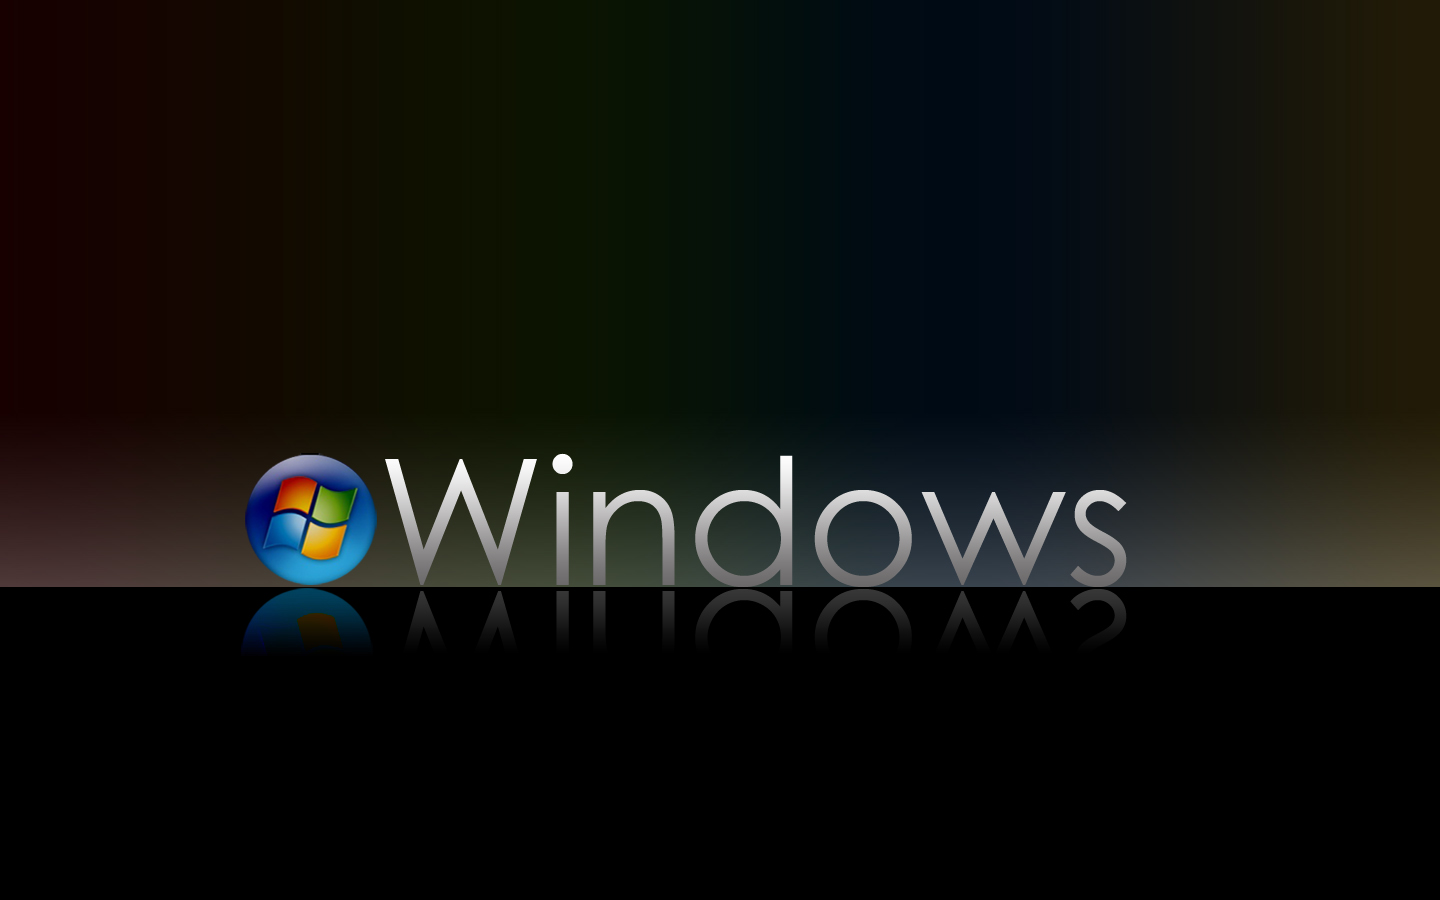 Windows Nine Wallpaper And Themes